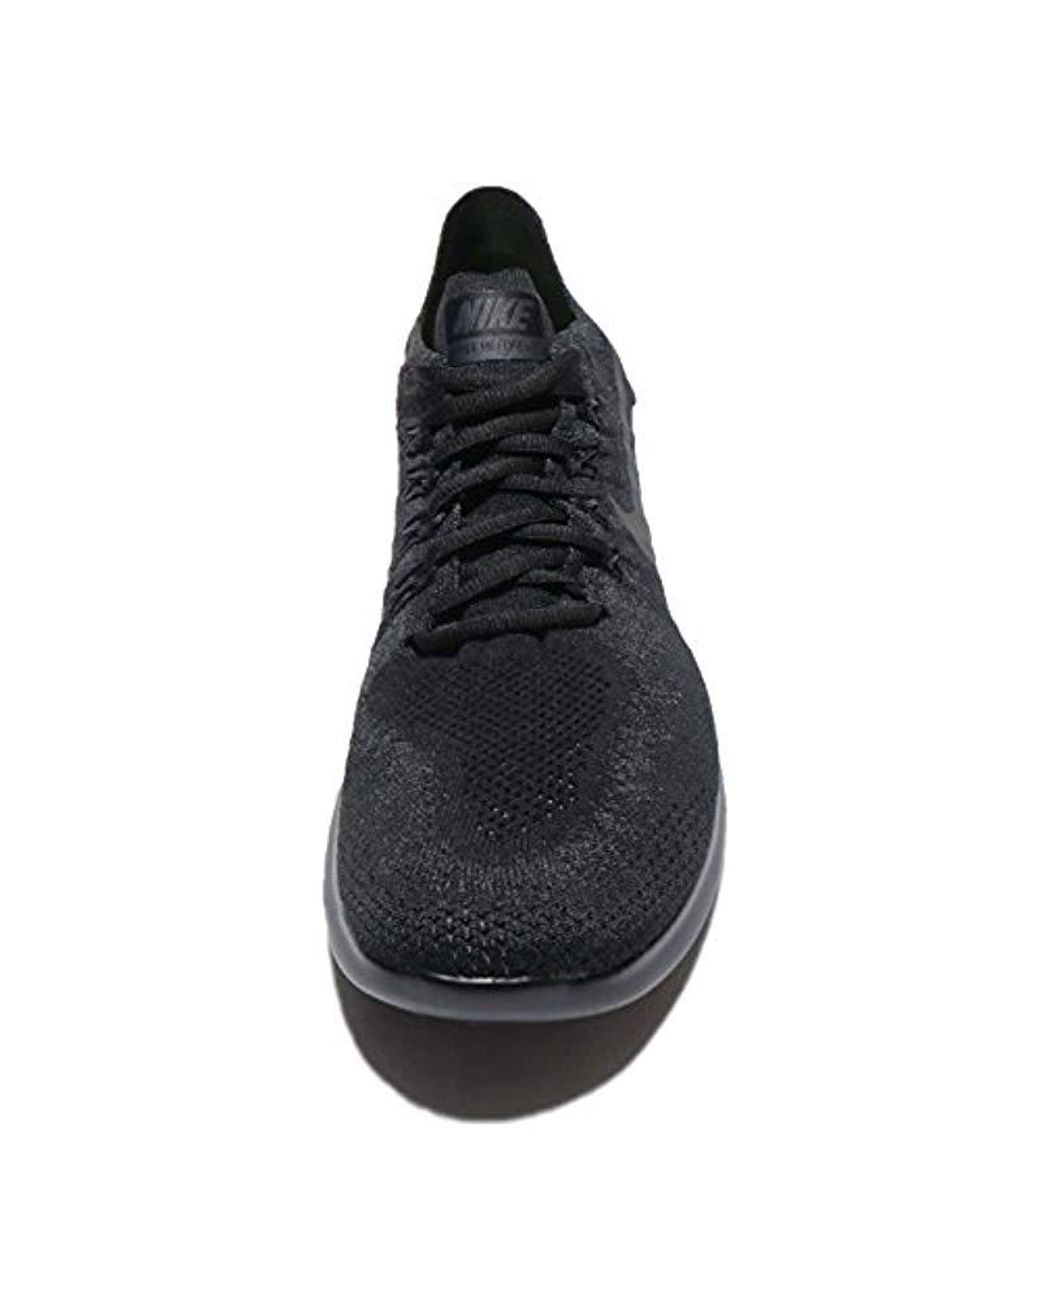 Nike Free Run Flyknit 2017 Running Shoes Black Size: 13 Uk for Men | Lyst UK